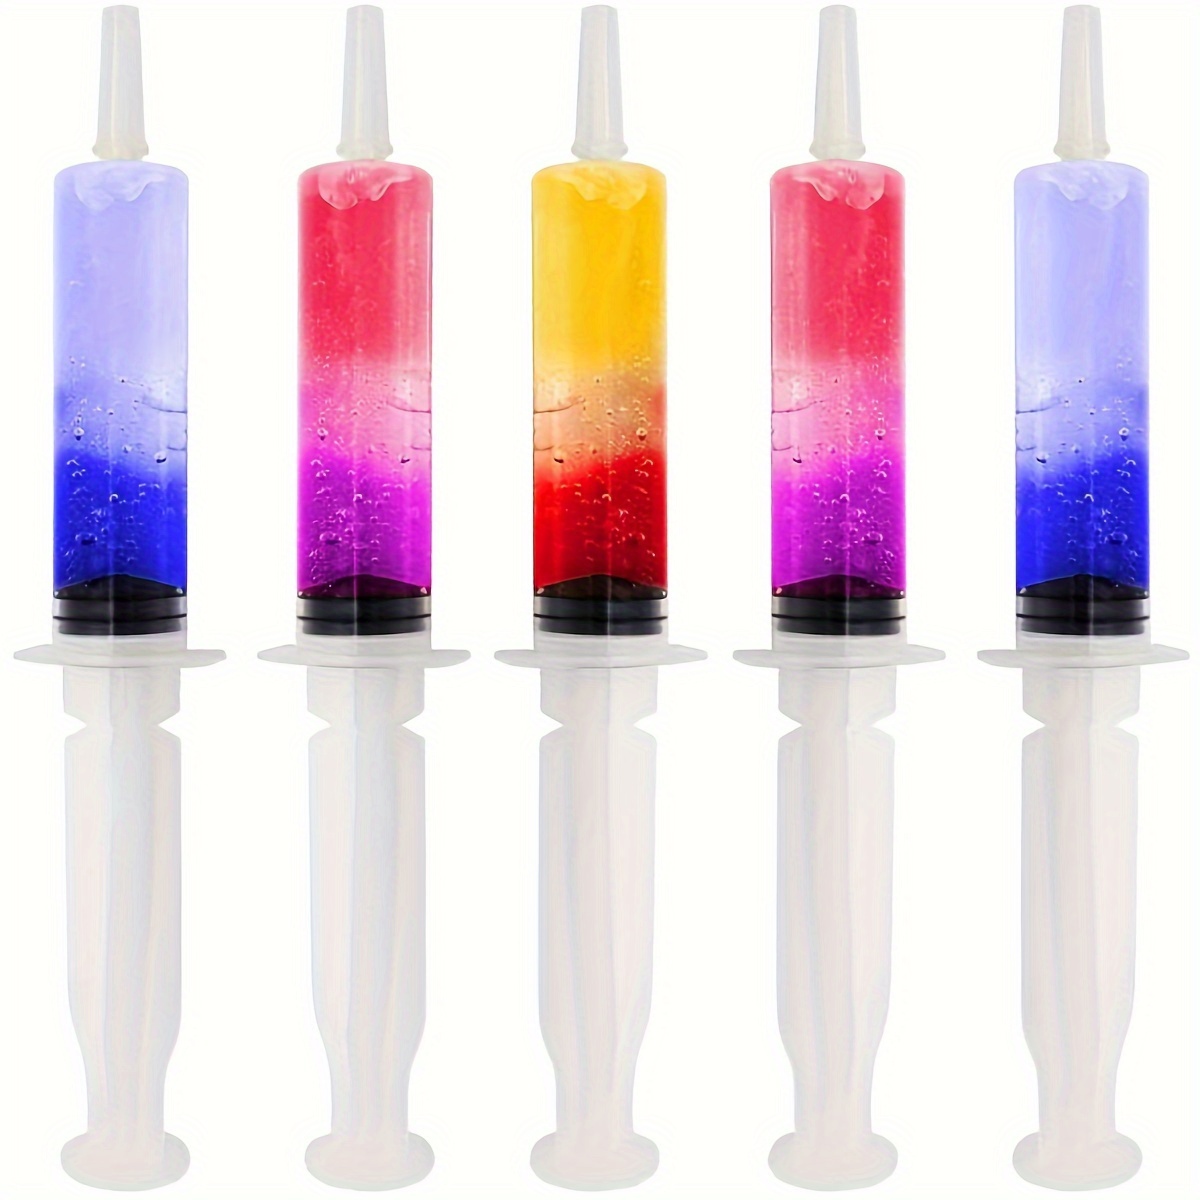 10Pcs nurse multi-color pen Colored Pens Pen Holder Multi Colored Pens for